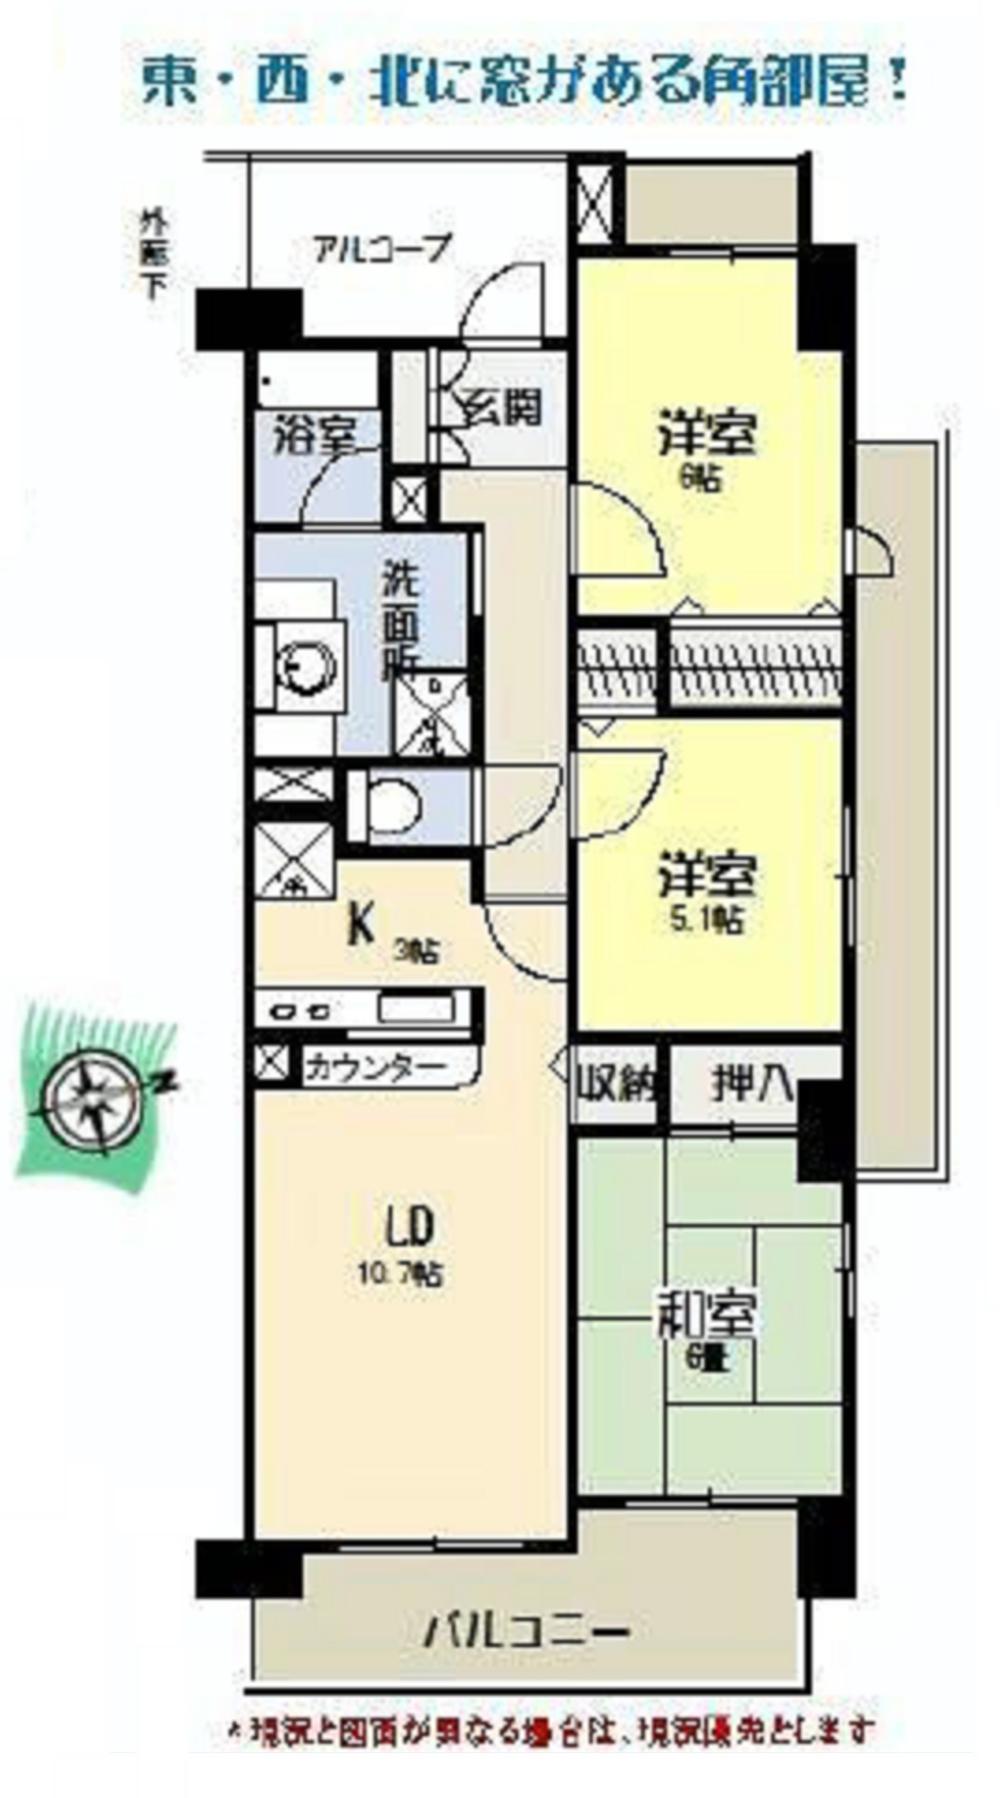 Floor plan. 3LDK, Price 19.3 million yen, Occupied area 69.94 sq m , Balcony area 18.53 sq m